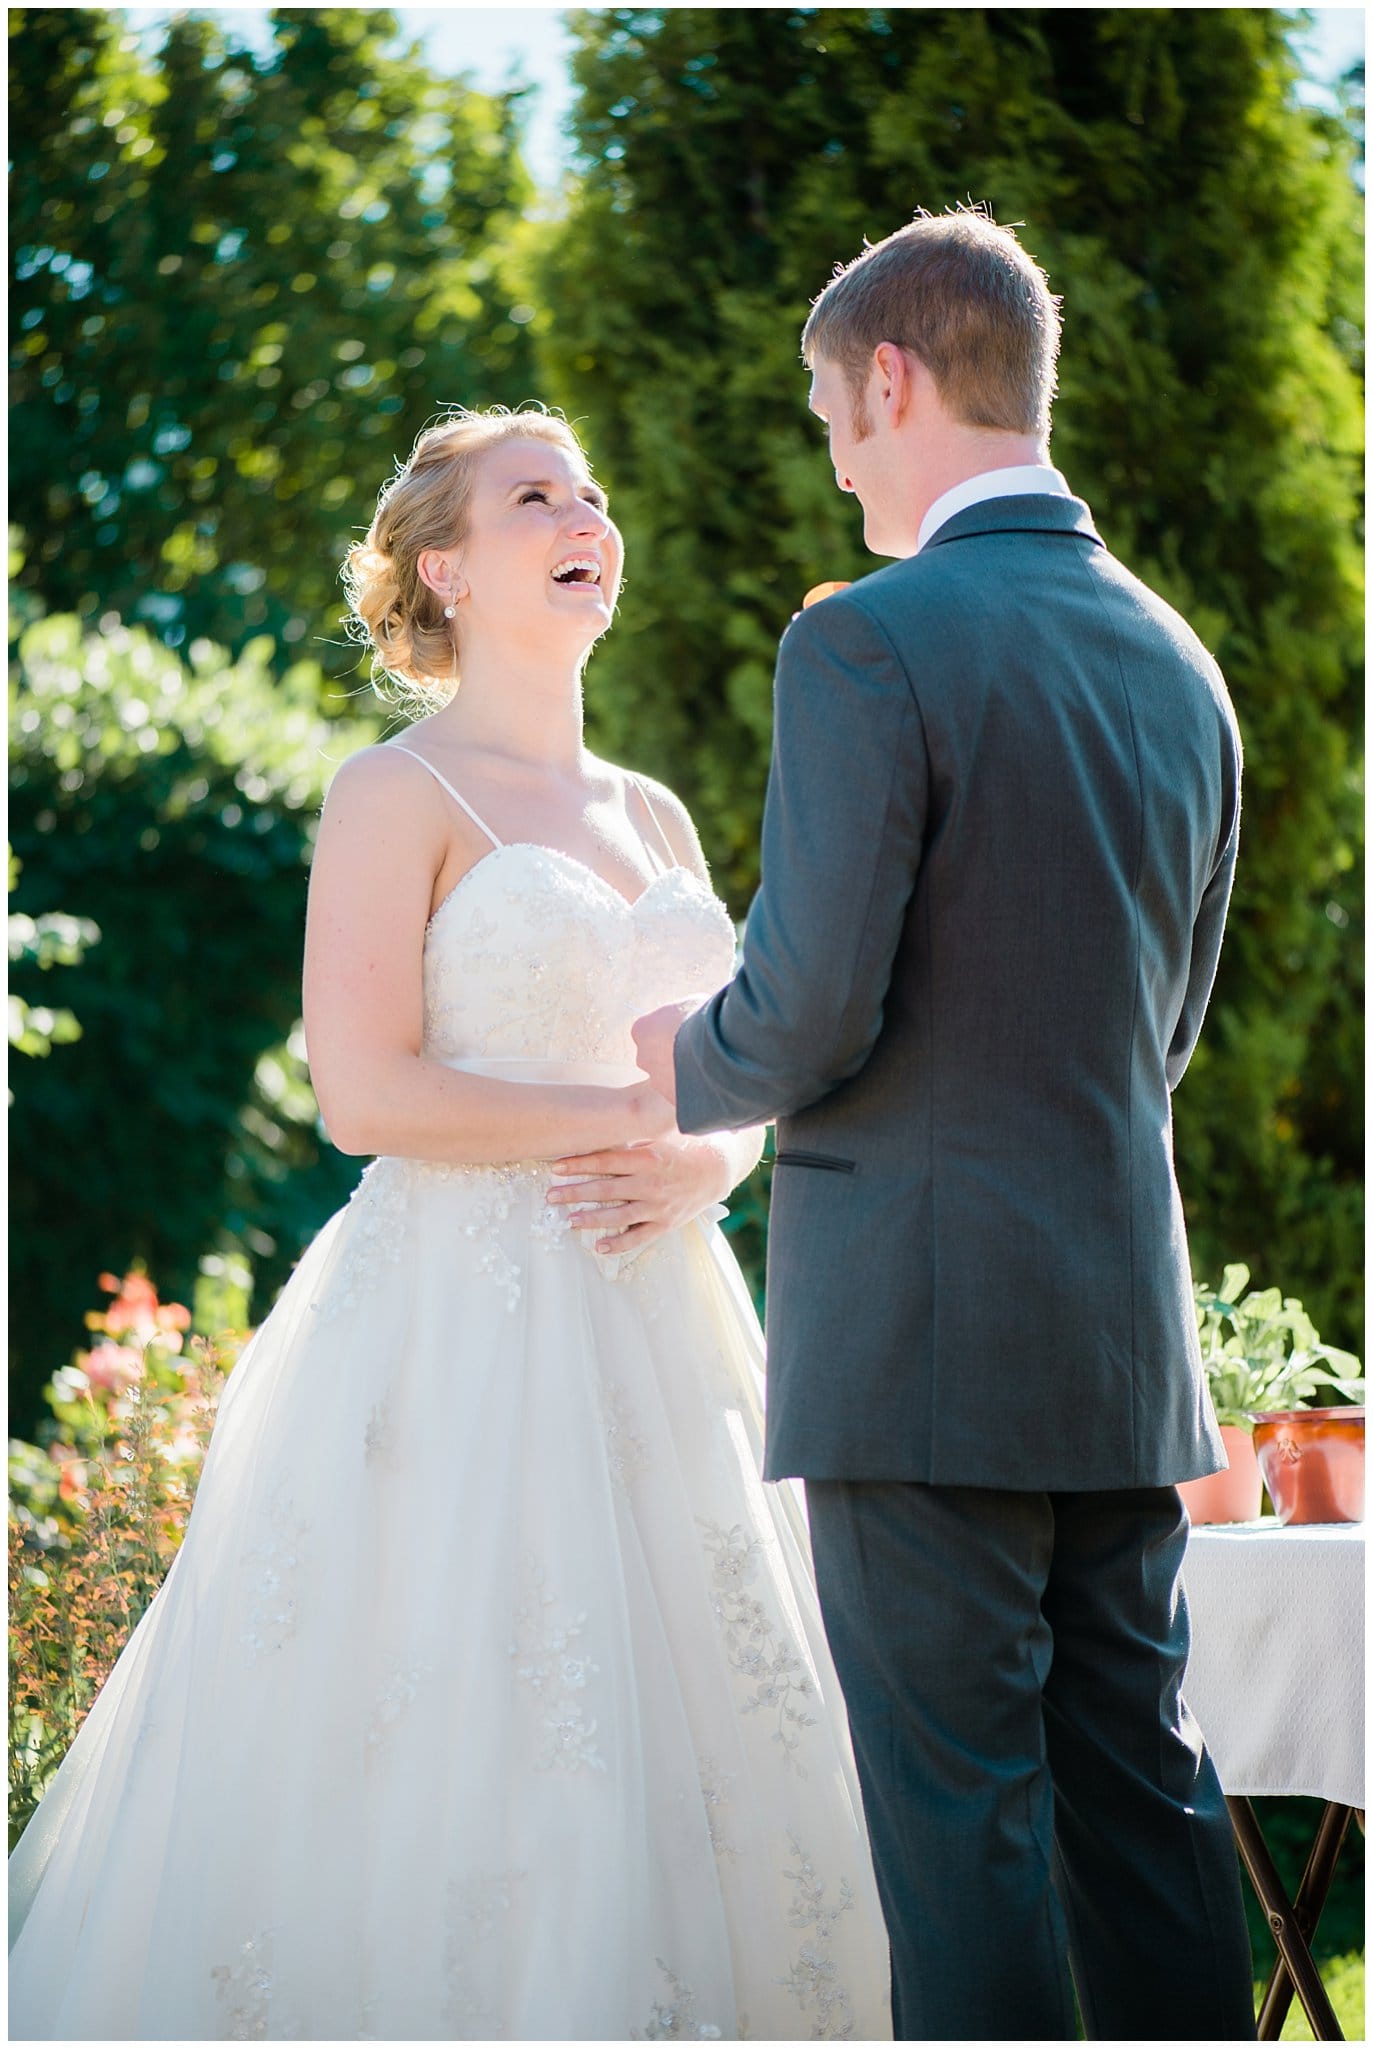 bride laughing during vows at Denver Botanic Gardens wedding by Denver wedding photographer Jennie Crate